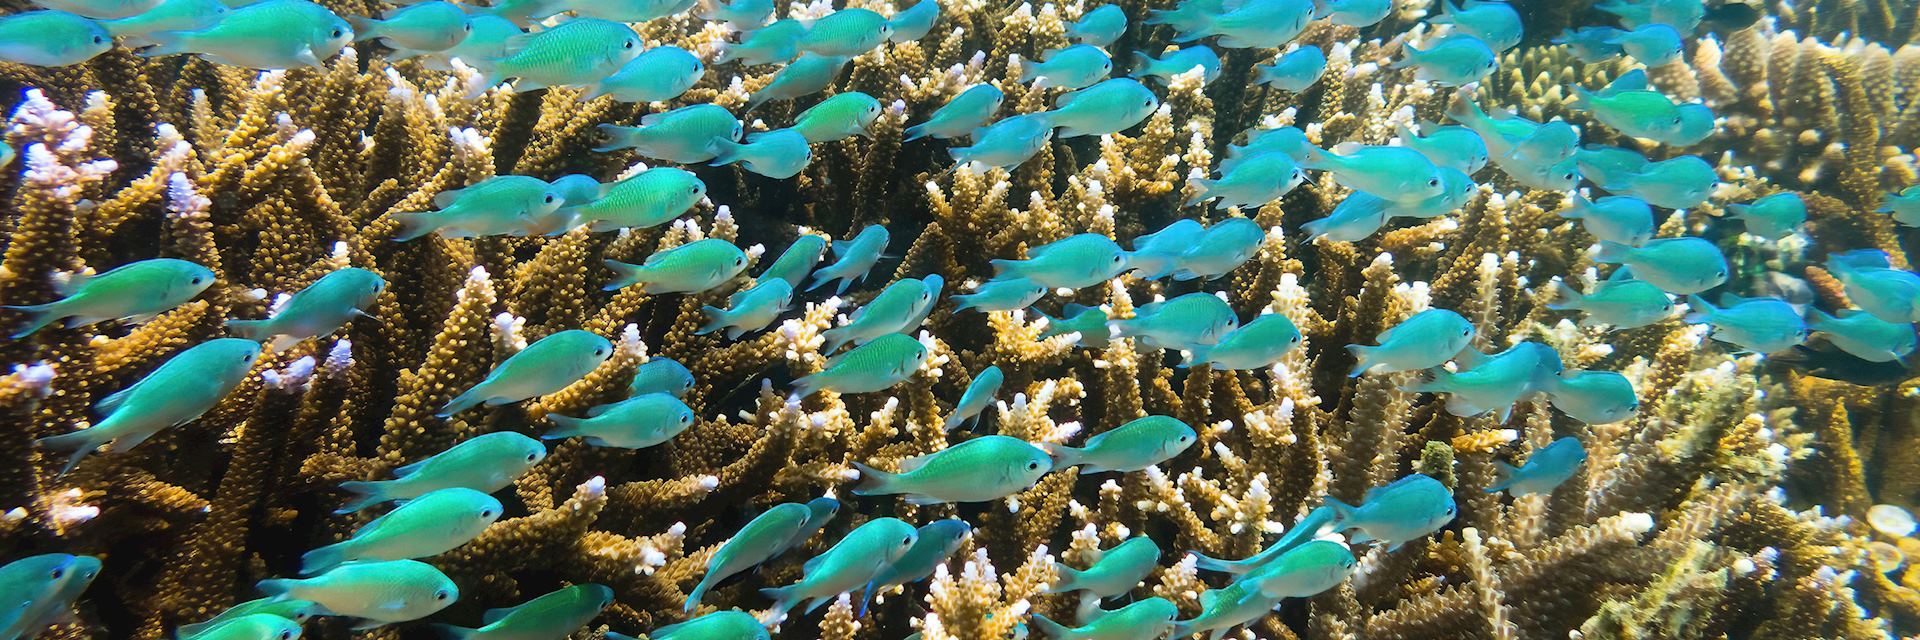 Underwater marine life in Fiji